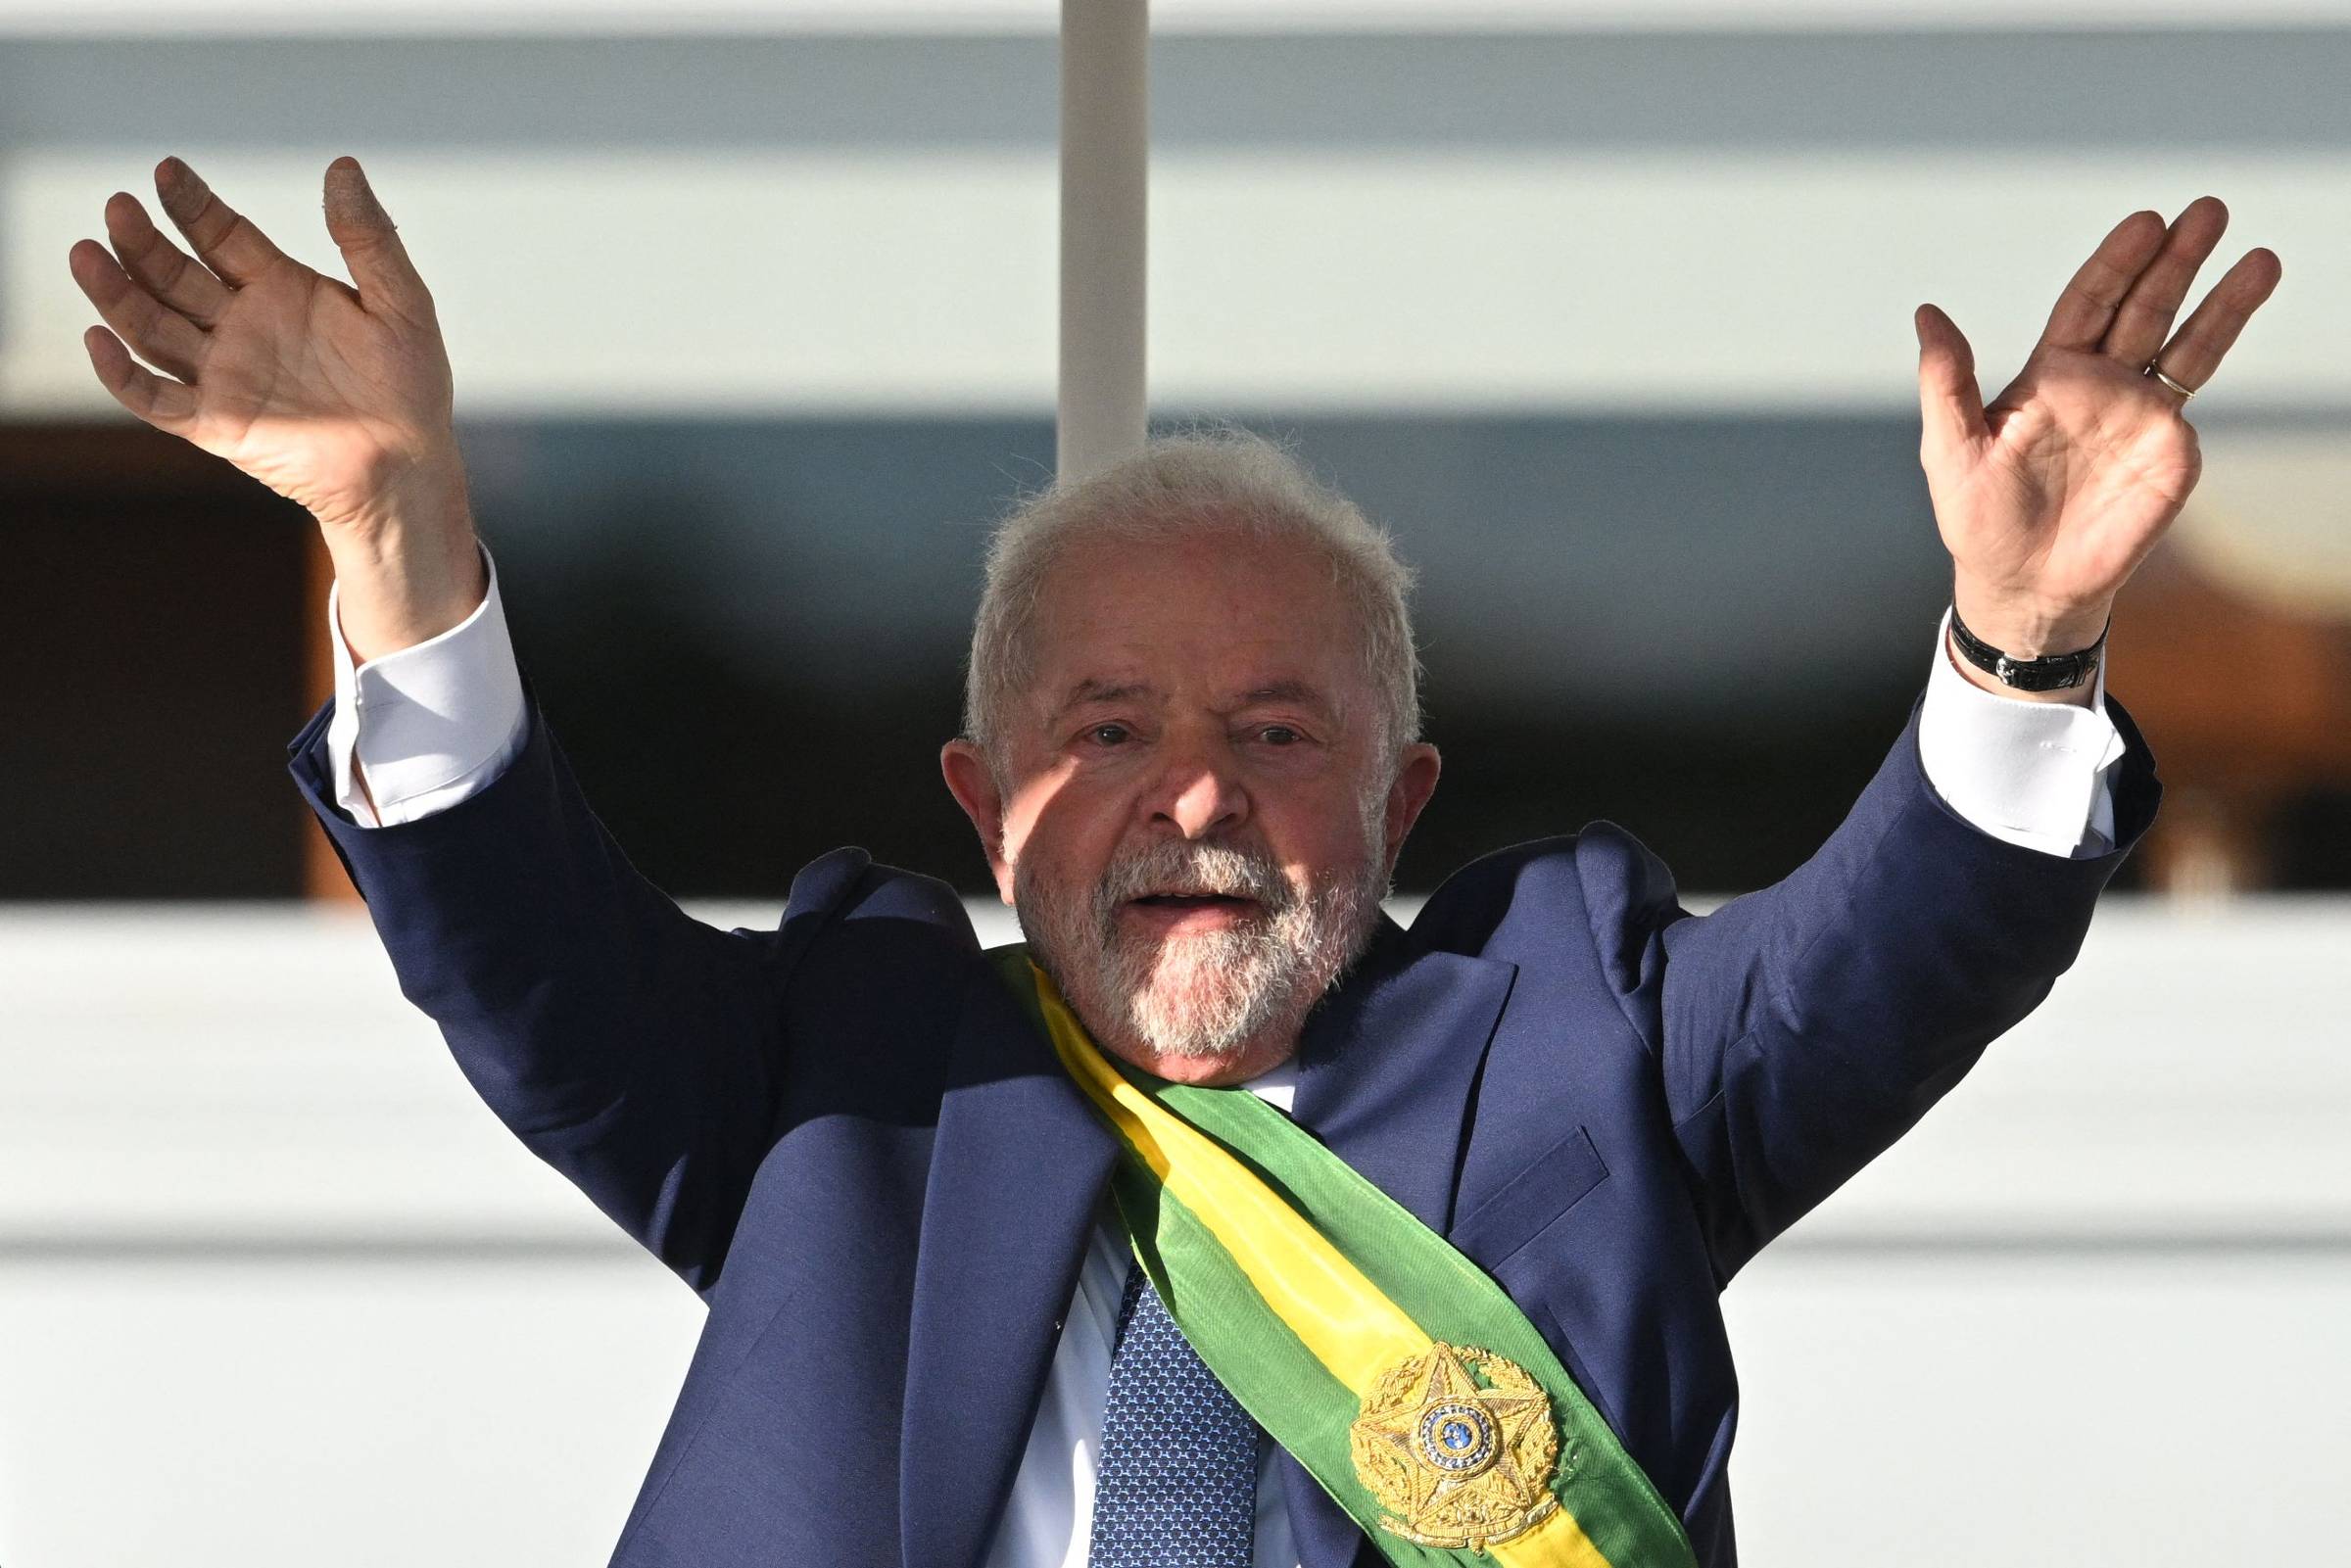 Datafolha: Lula reaps rewards, but sees limits to his agenda – 01/04/2023 – Bruno Boghossian